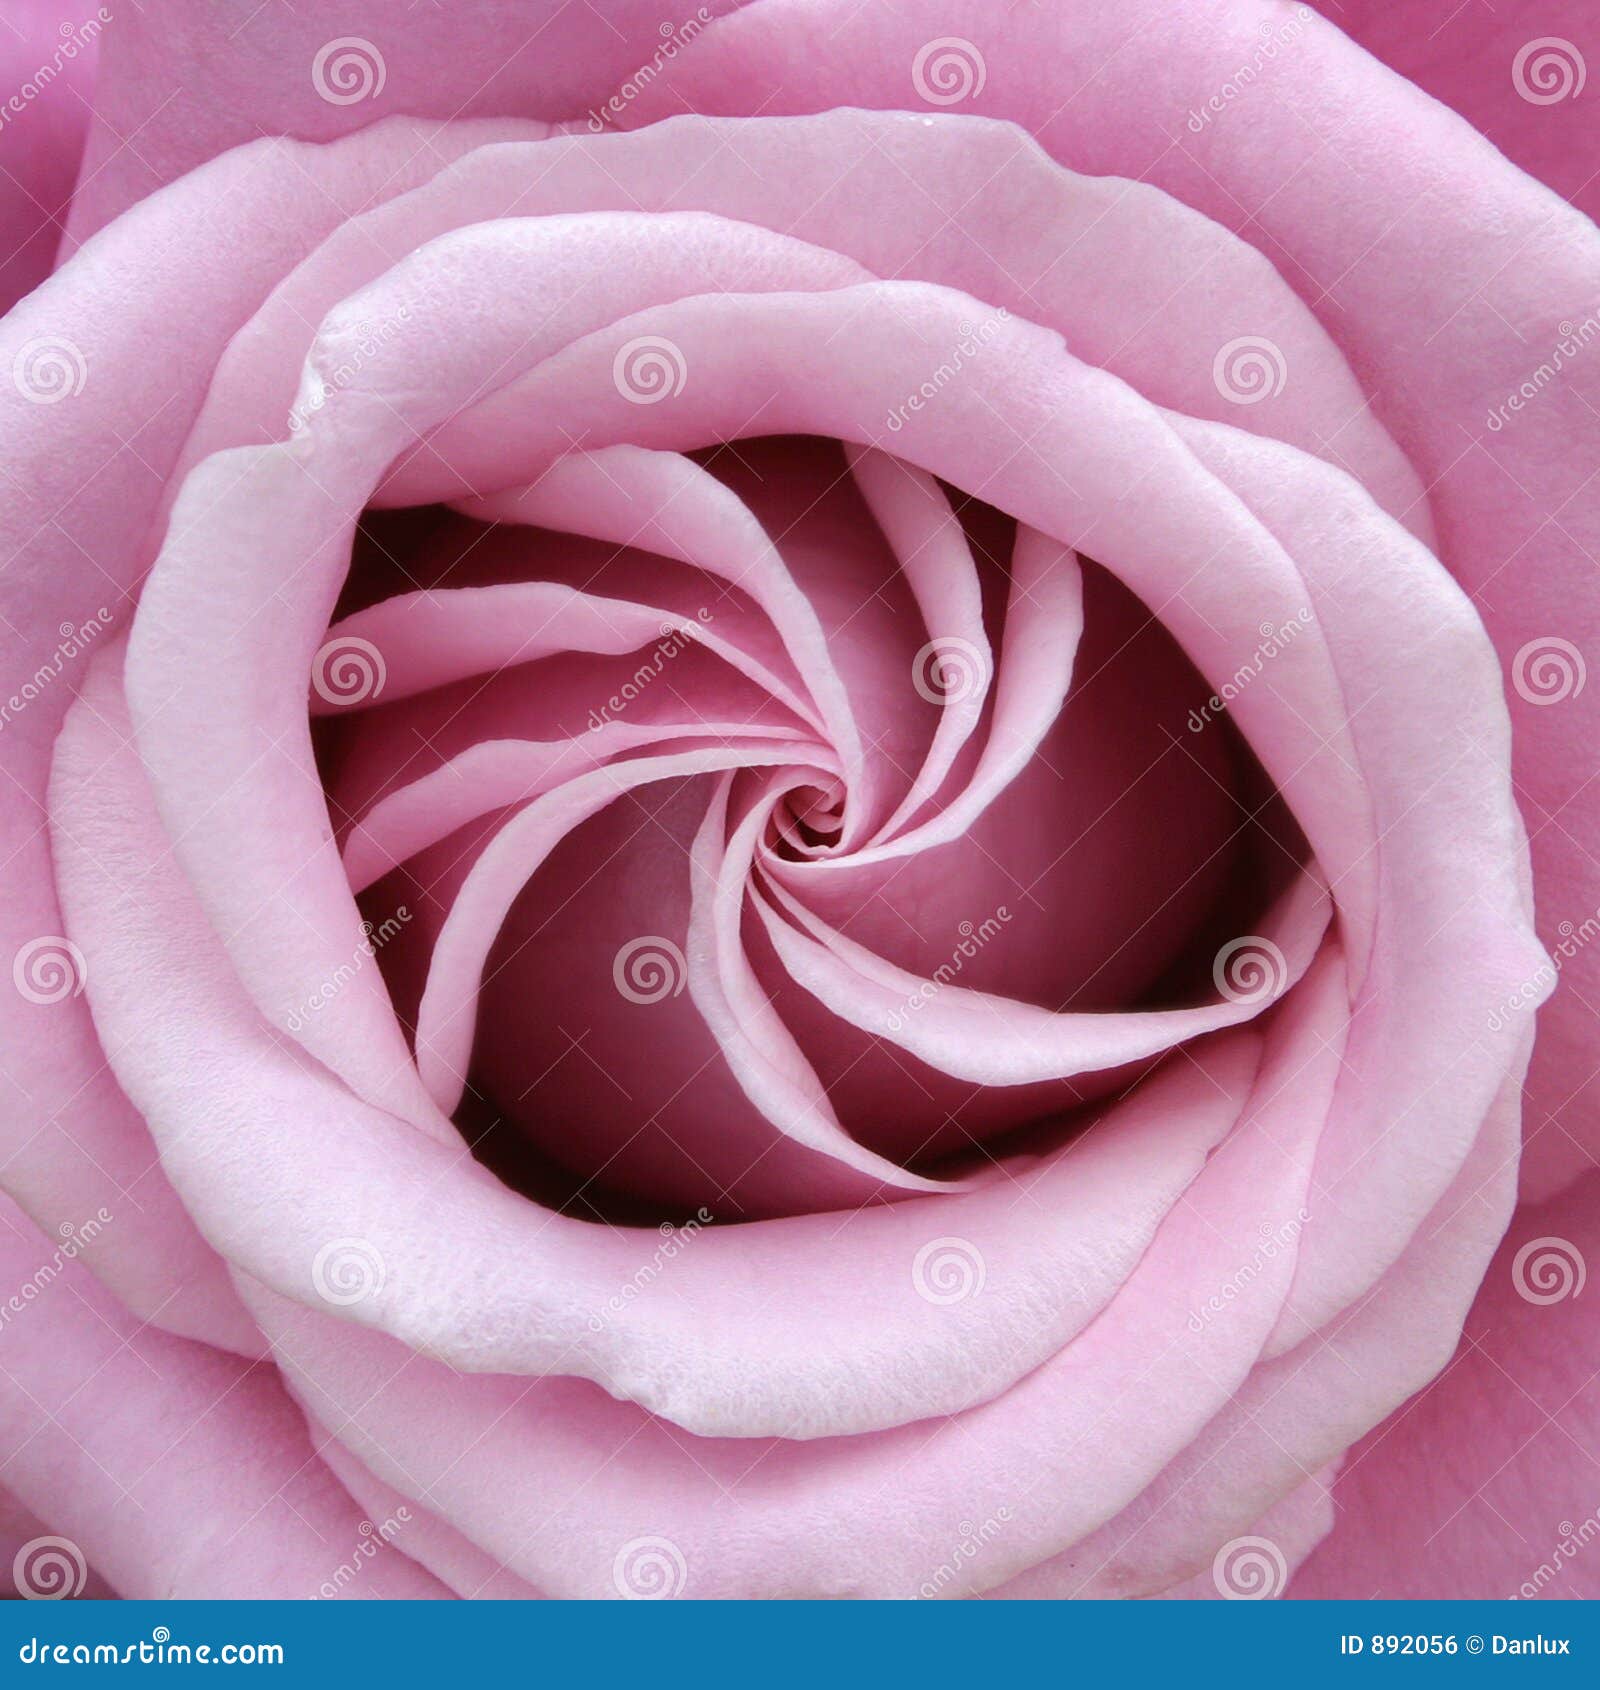 rose perfect spiral